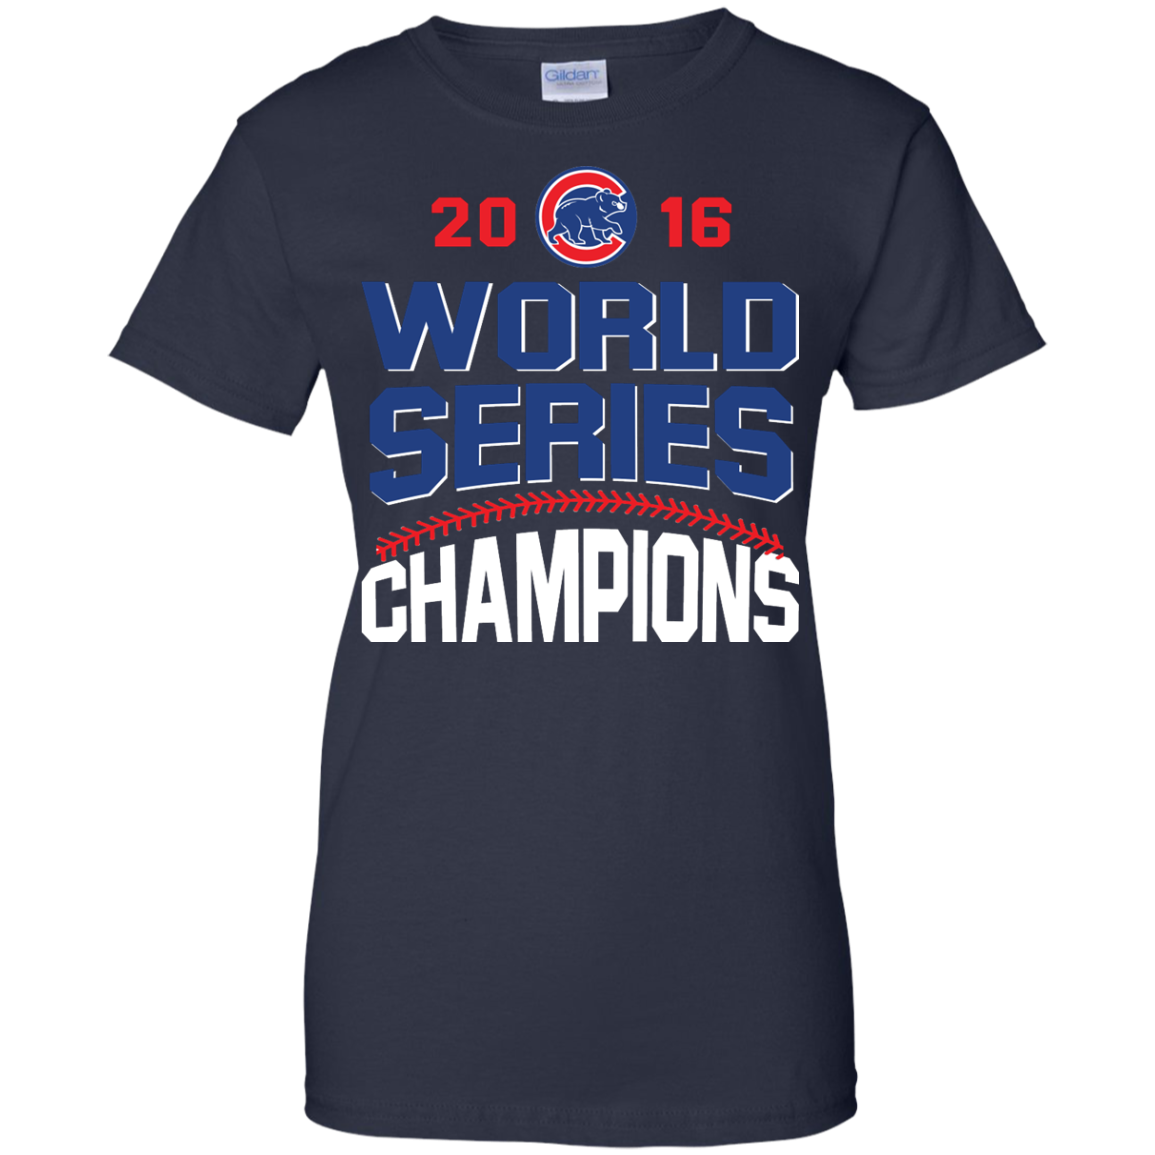 chicago cubs championship shirt